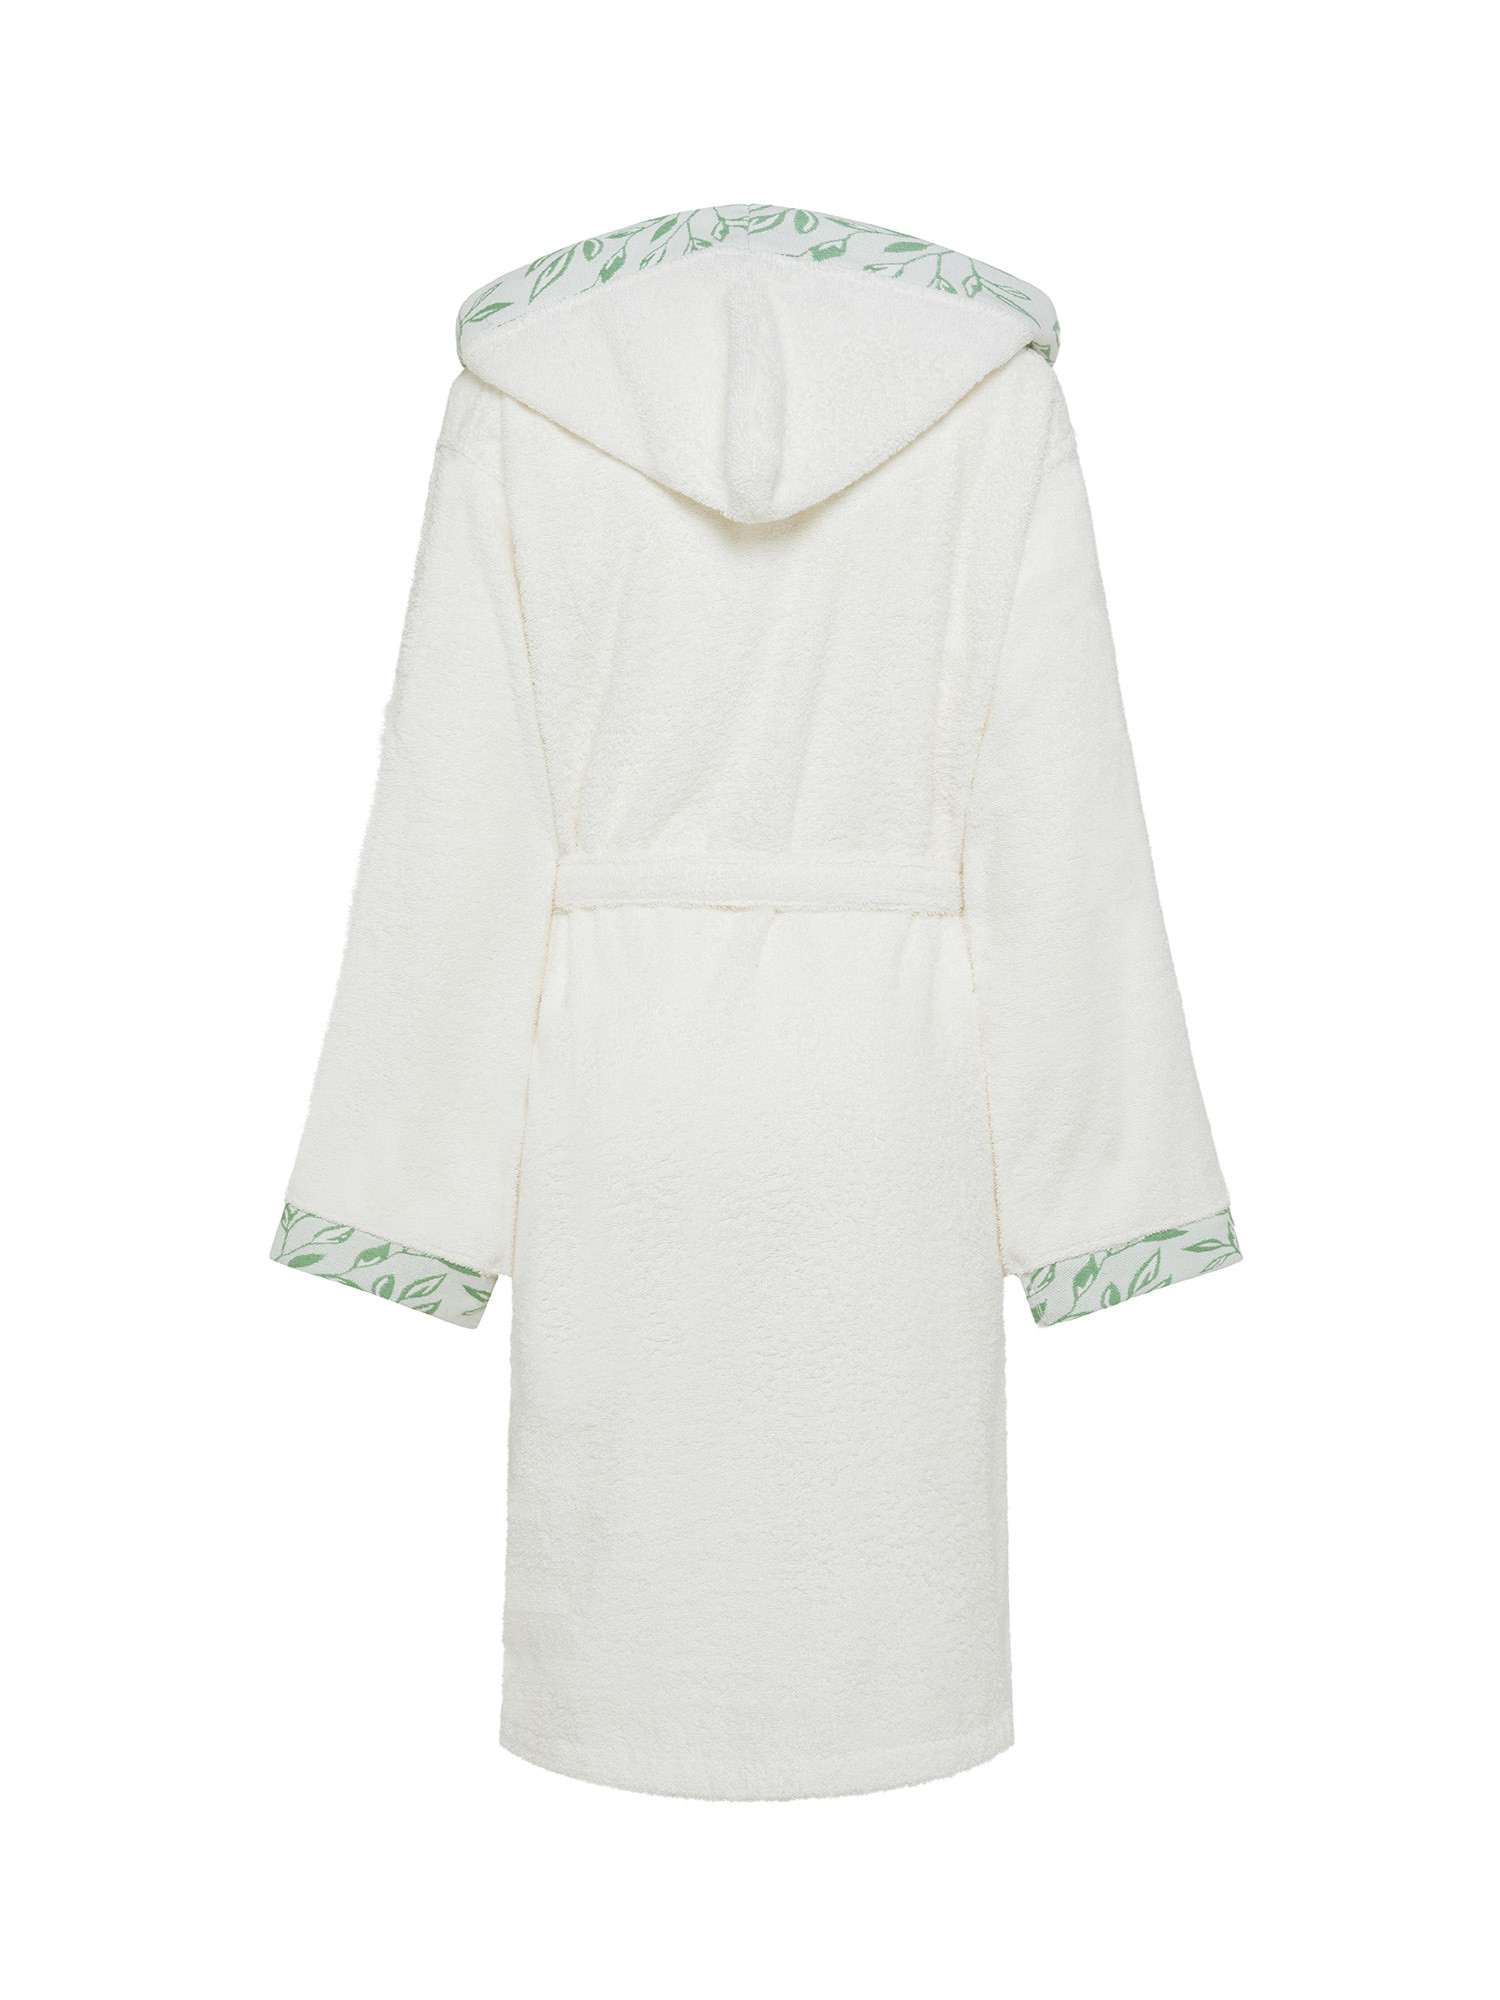 Cotton terry bathrobe with jacquard edge, White, large image number 1